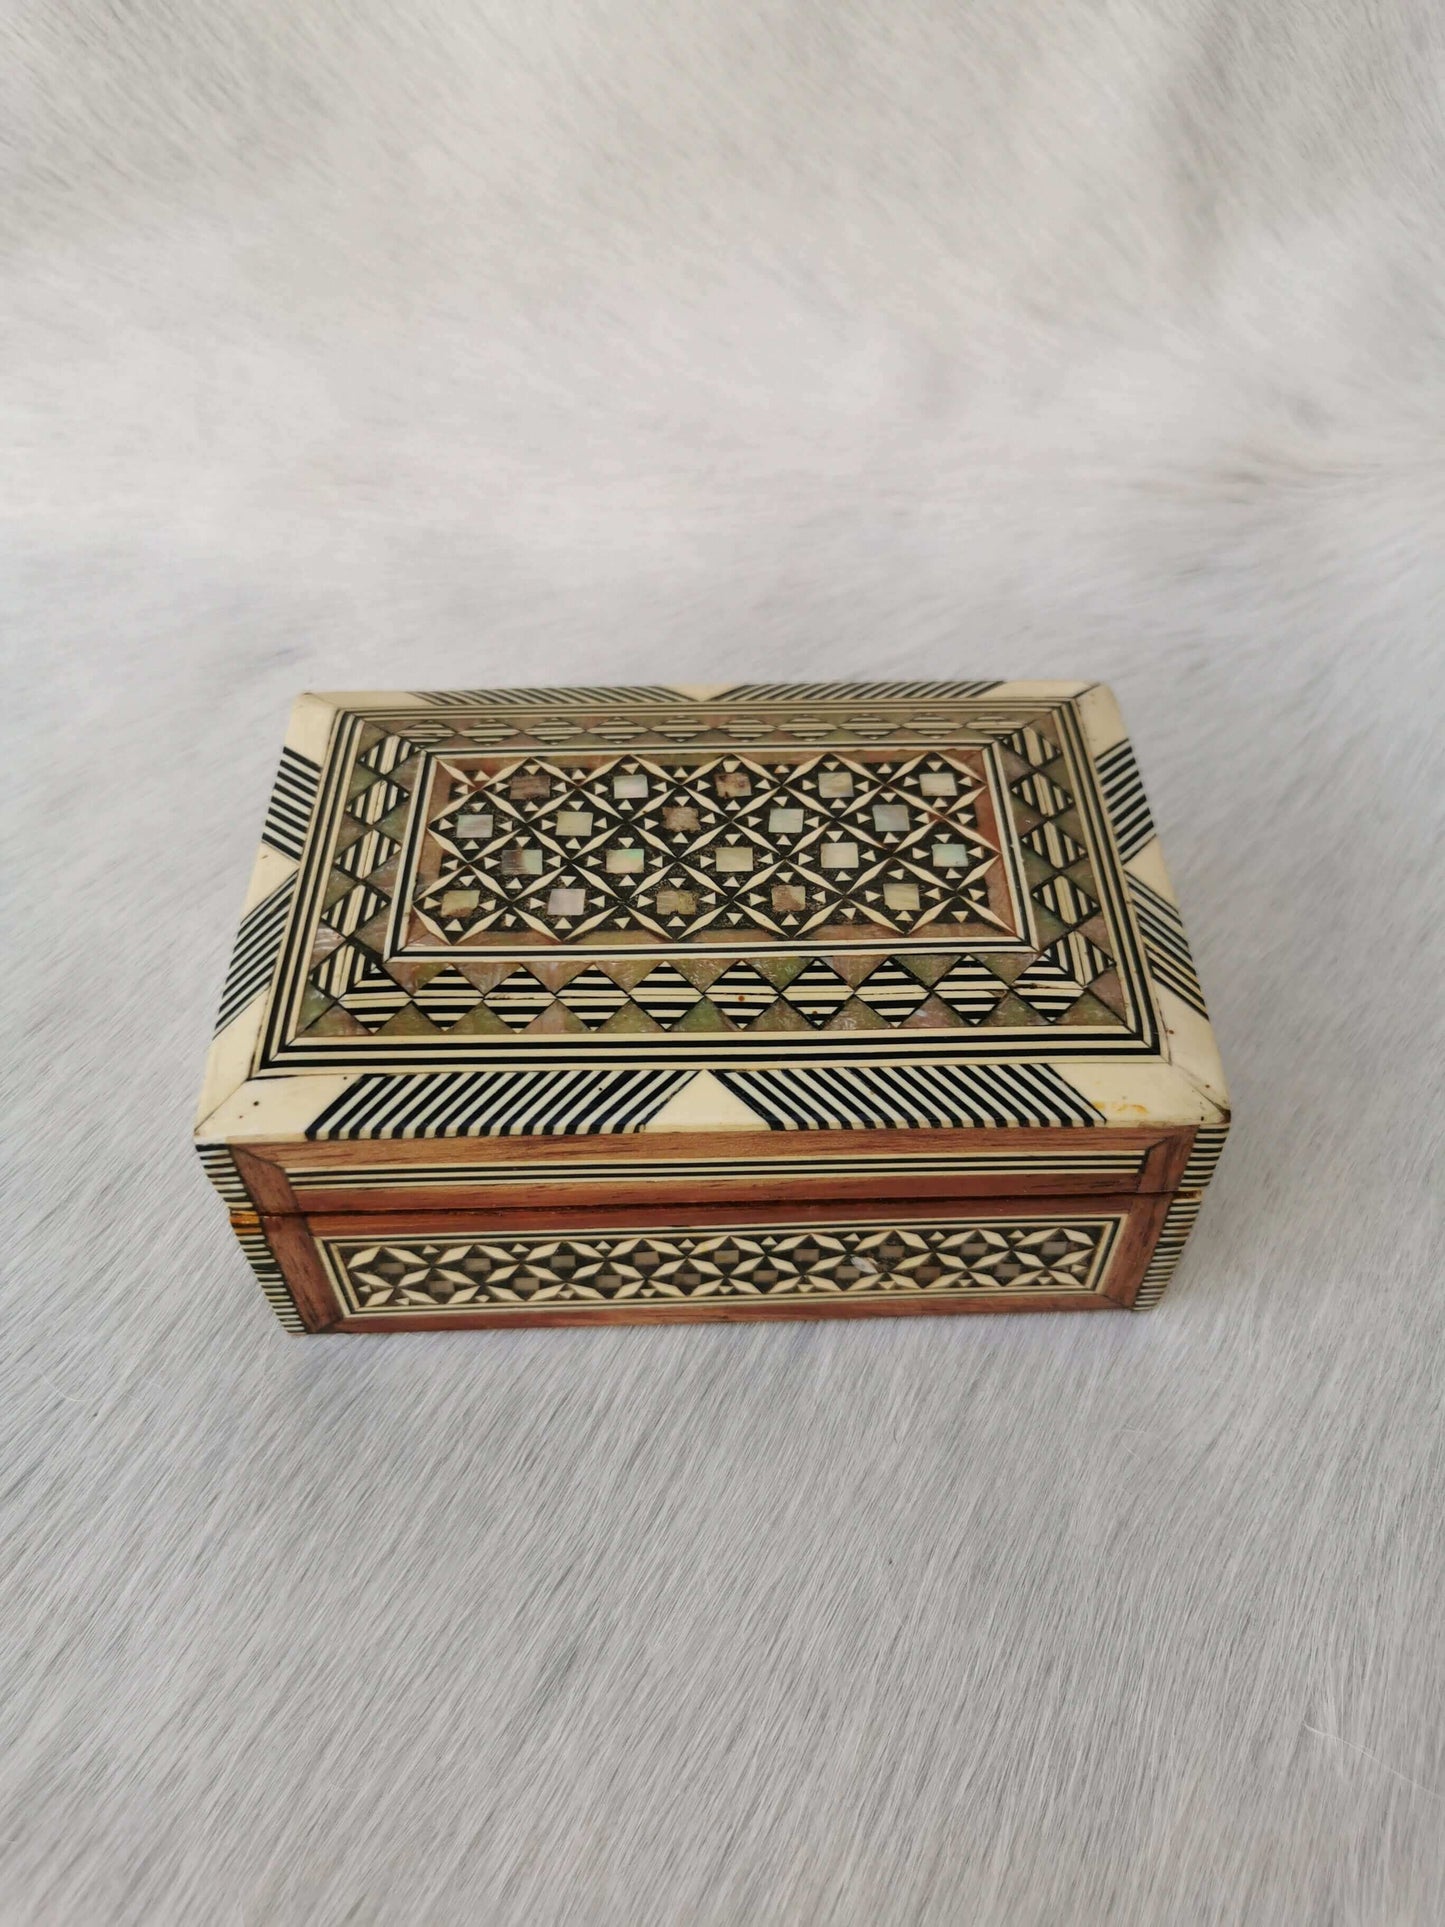 Box, Boxes, Jewelry Box, Egypt, Handmade, Vintage, Wood, Mother of Pearl, Mosaic, trinket box, camel bone, gift boxes, Arabic, Oriental